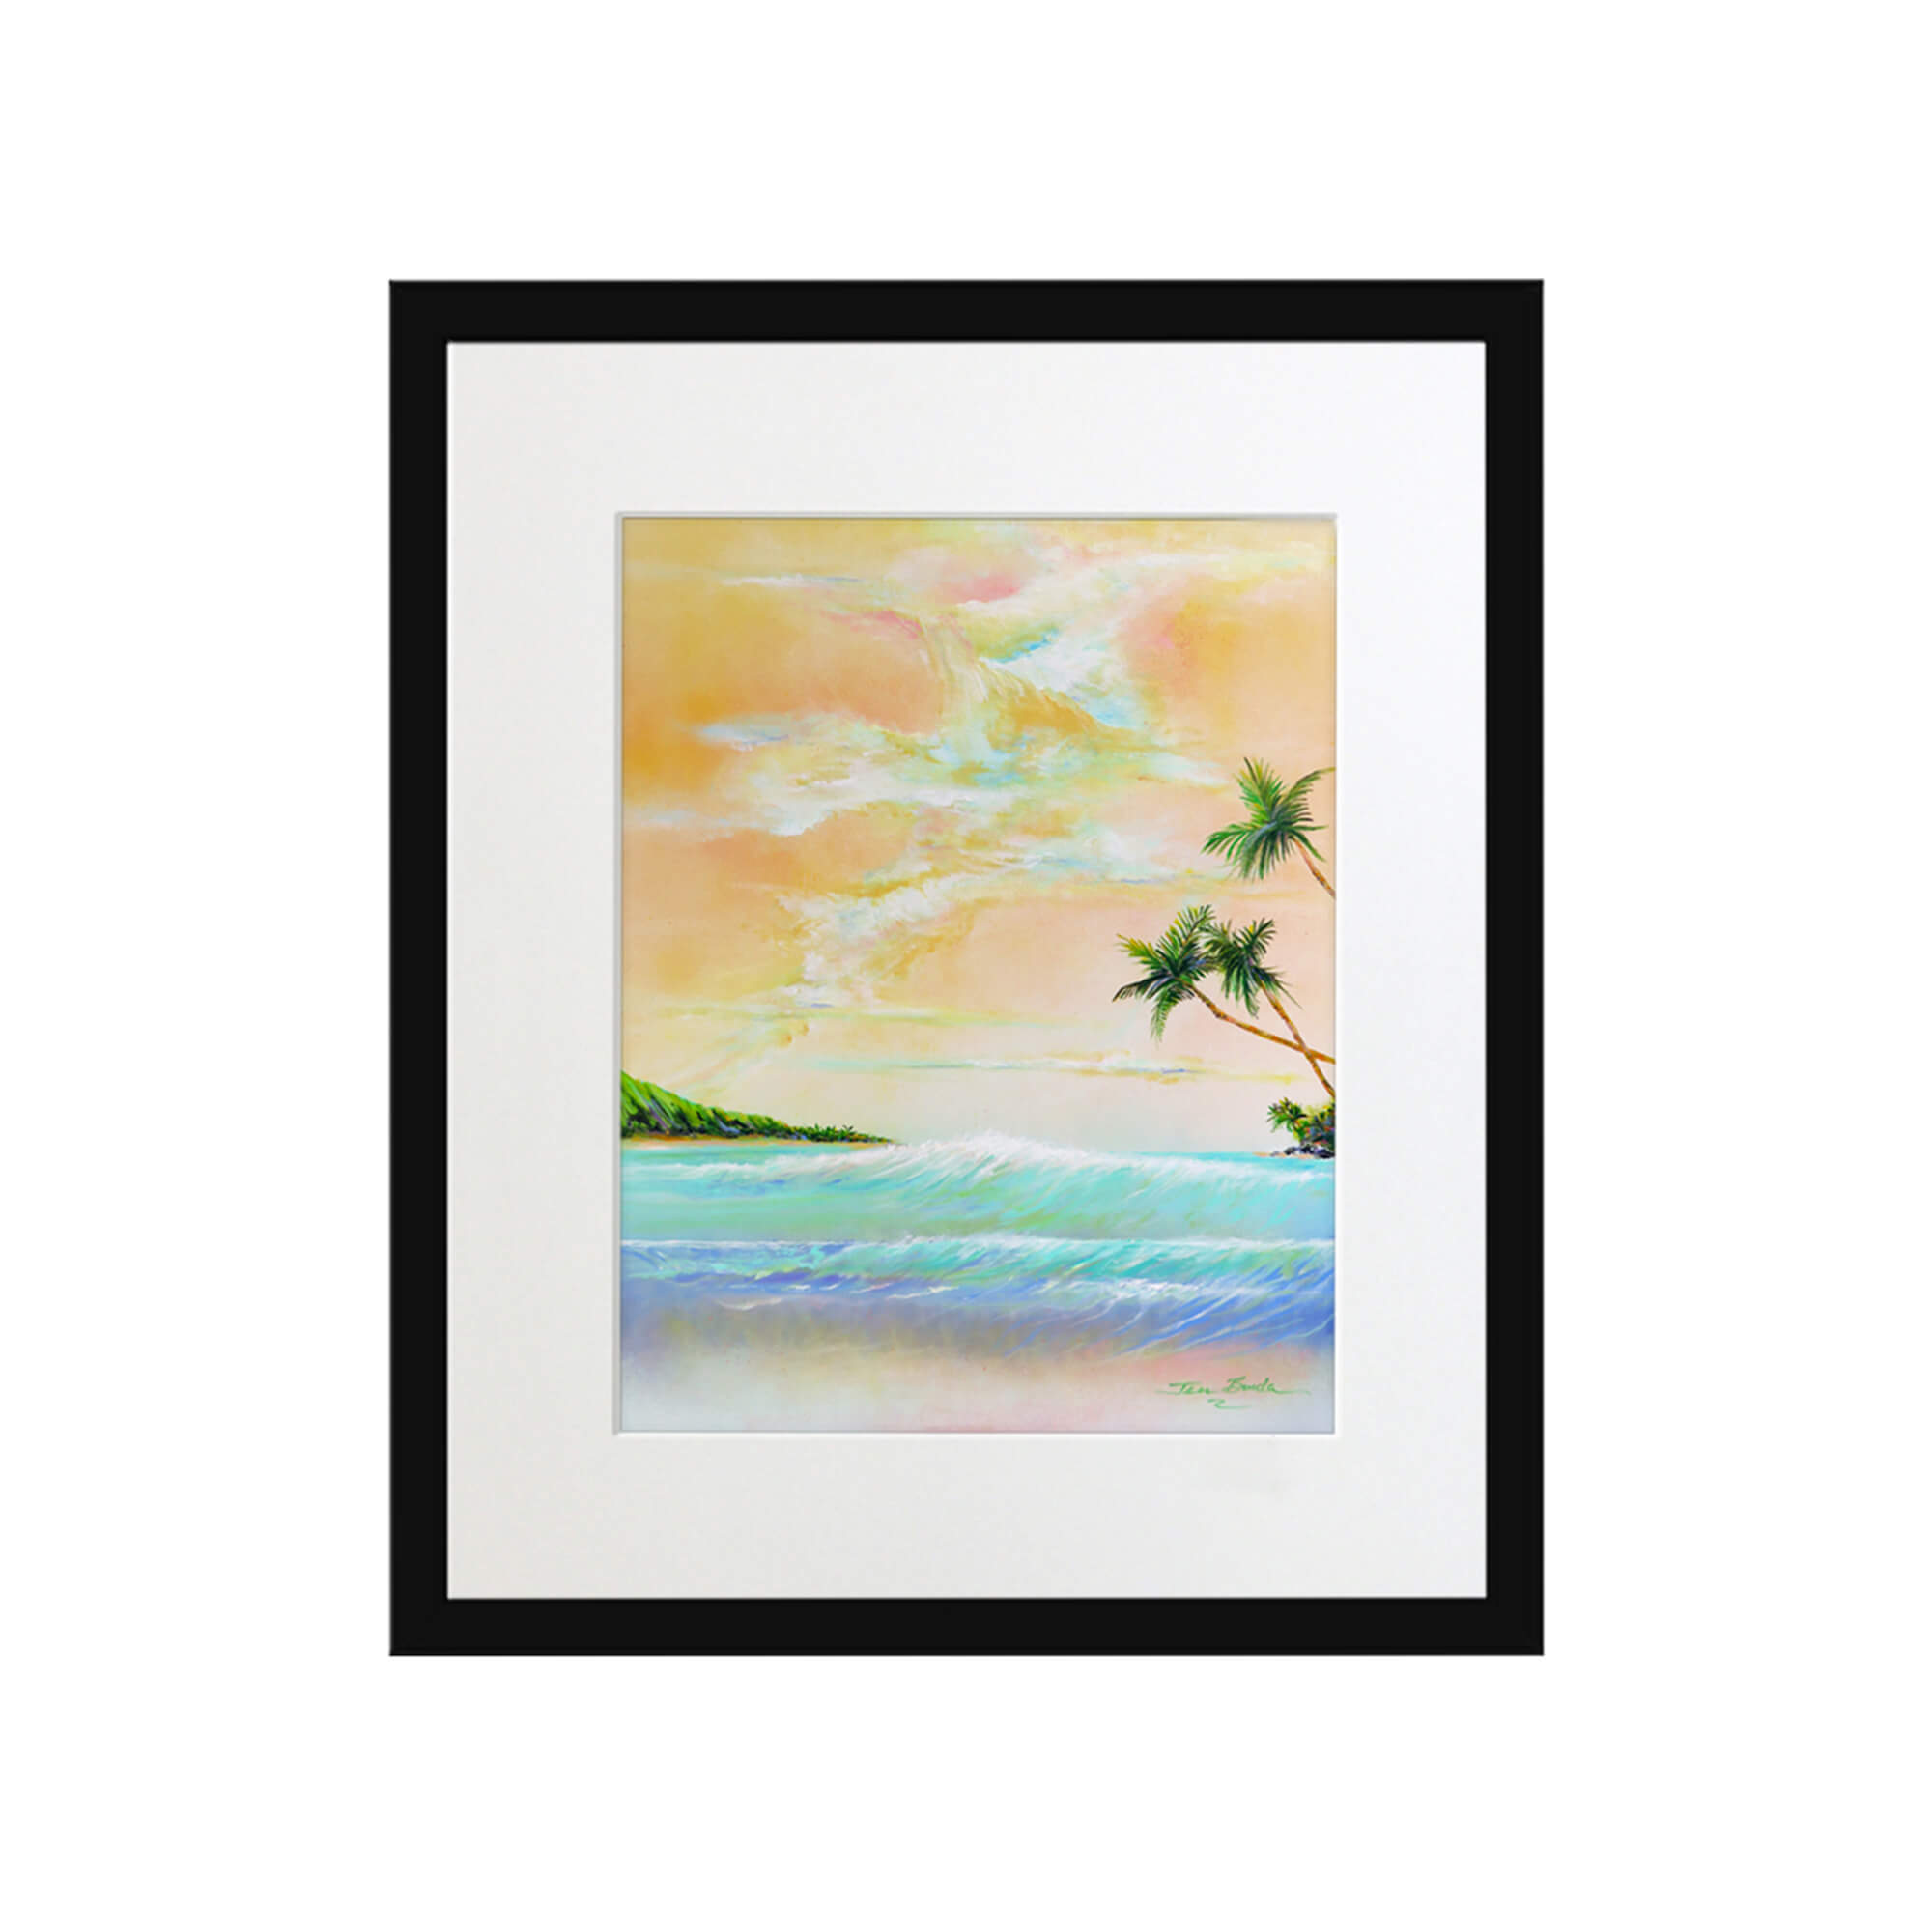 A serene seascape by Hawaii artist Jess Burda